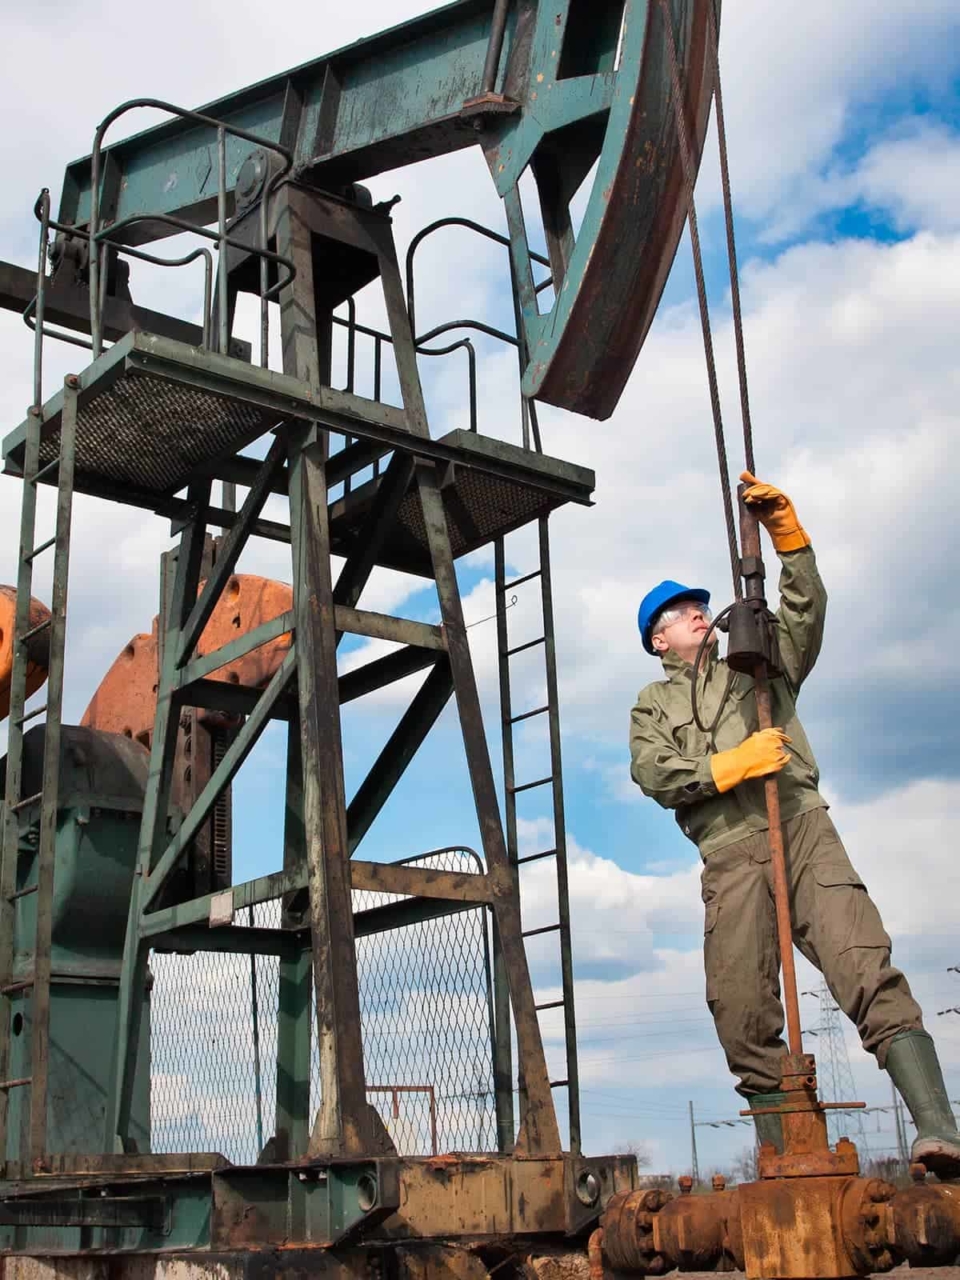 Man working on oil pump